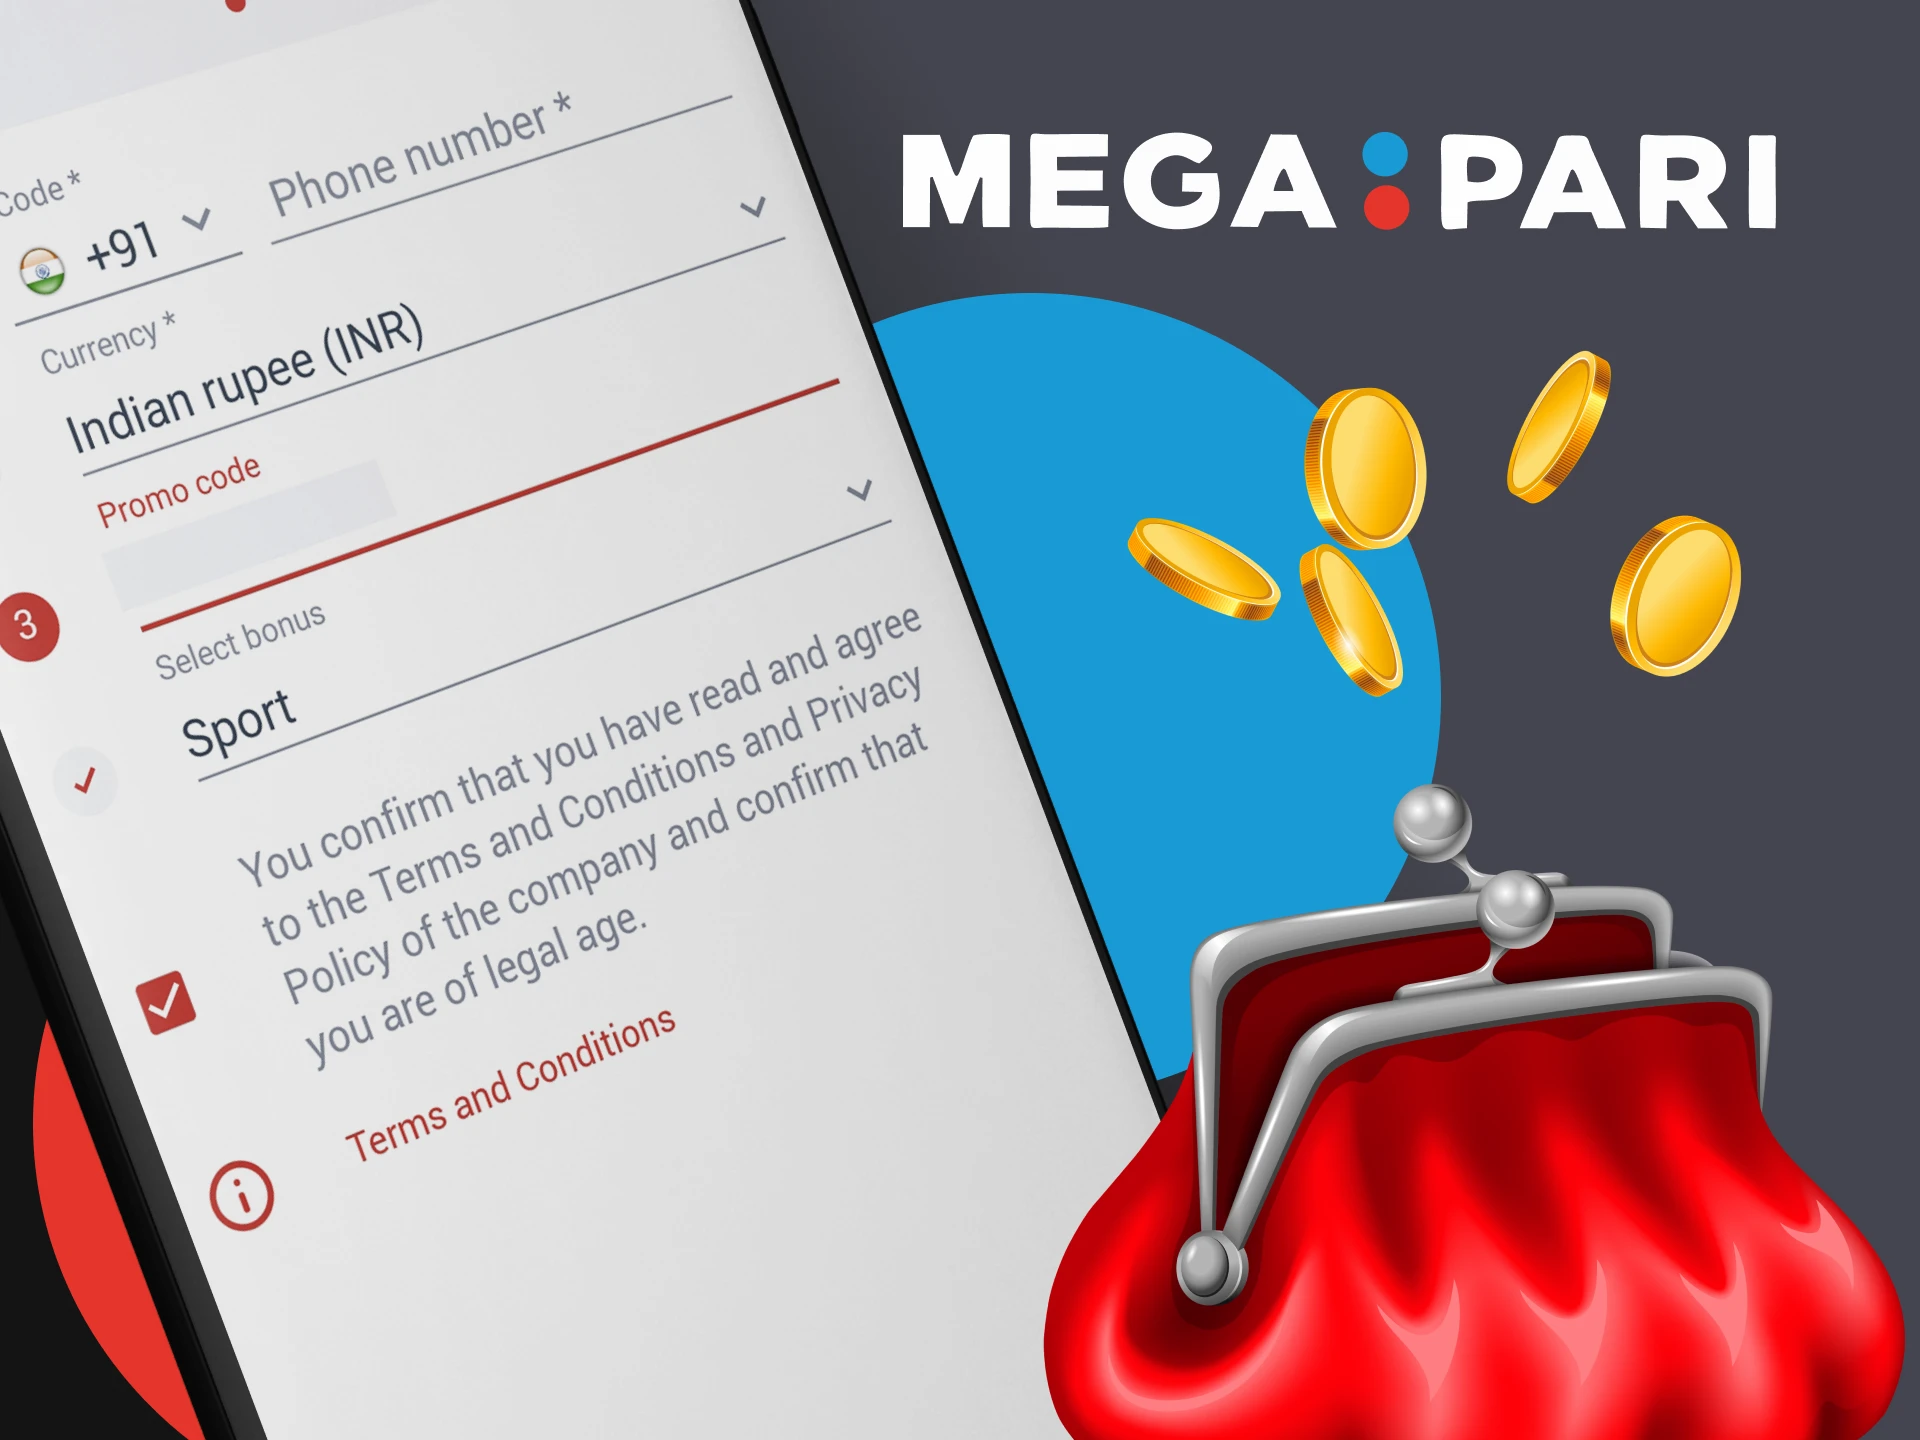 You can use the promo code through the Megapari app.